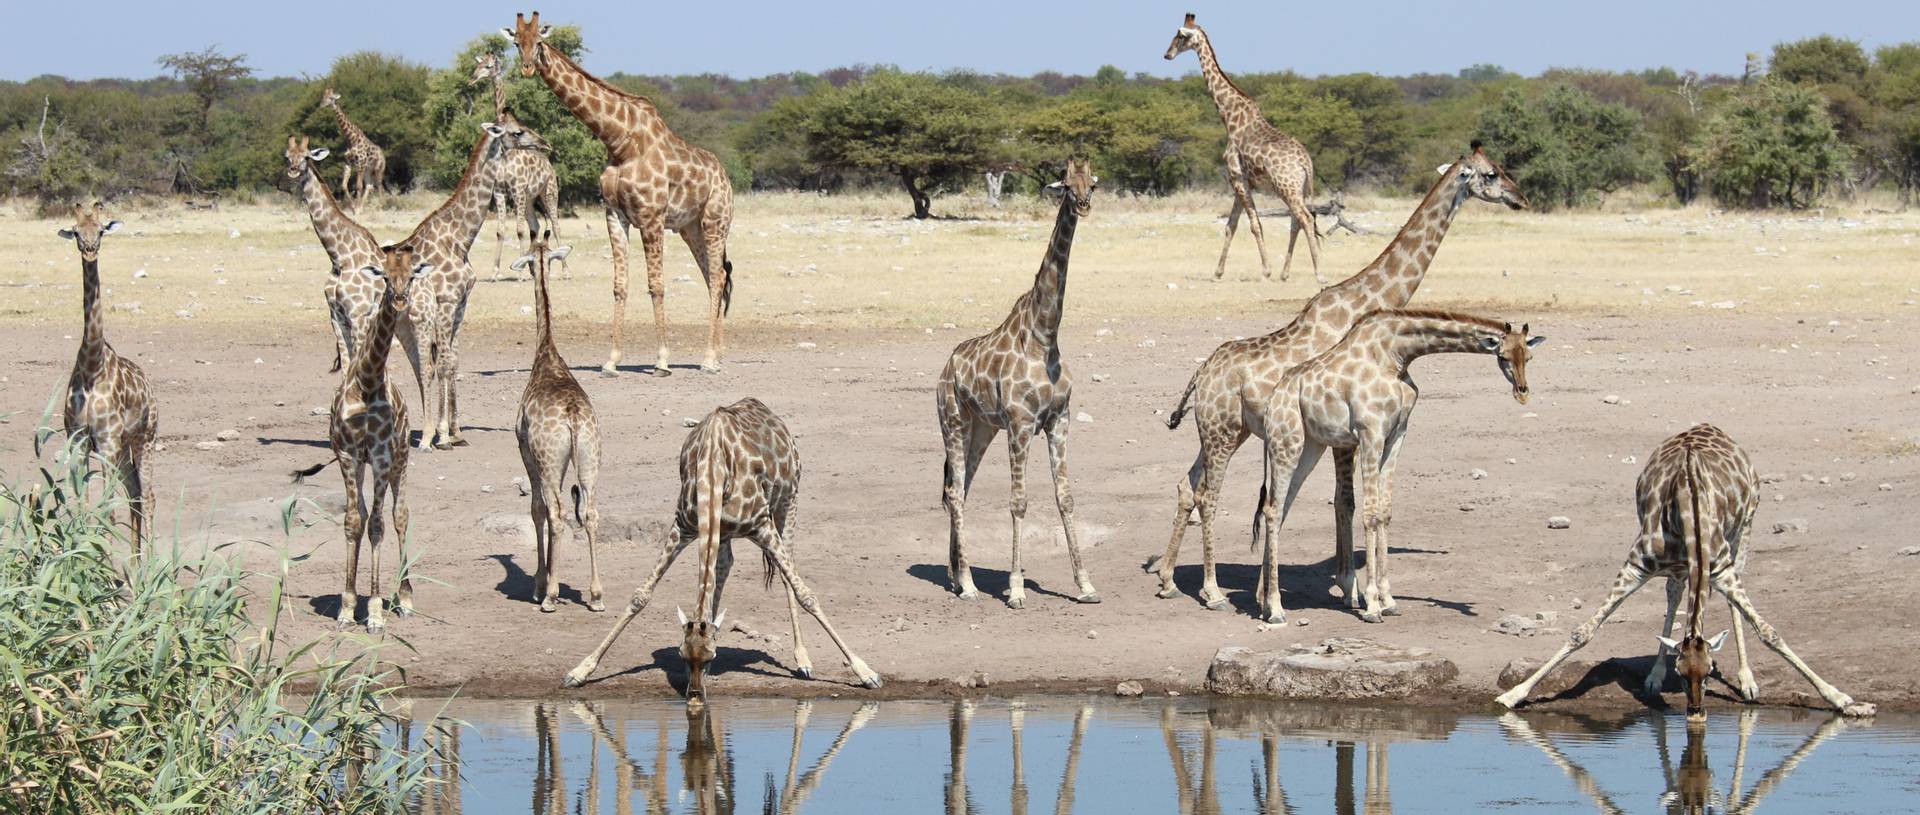 Giraffes Drinking, Etosha N.P. Namibia